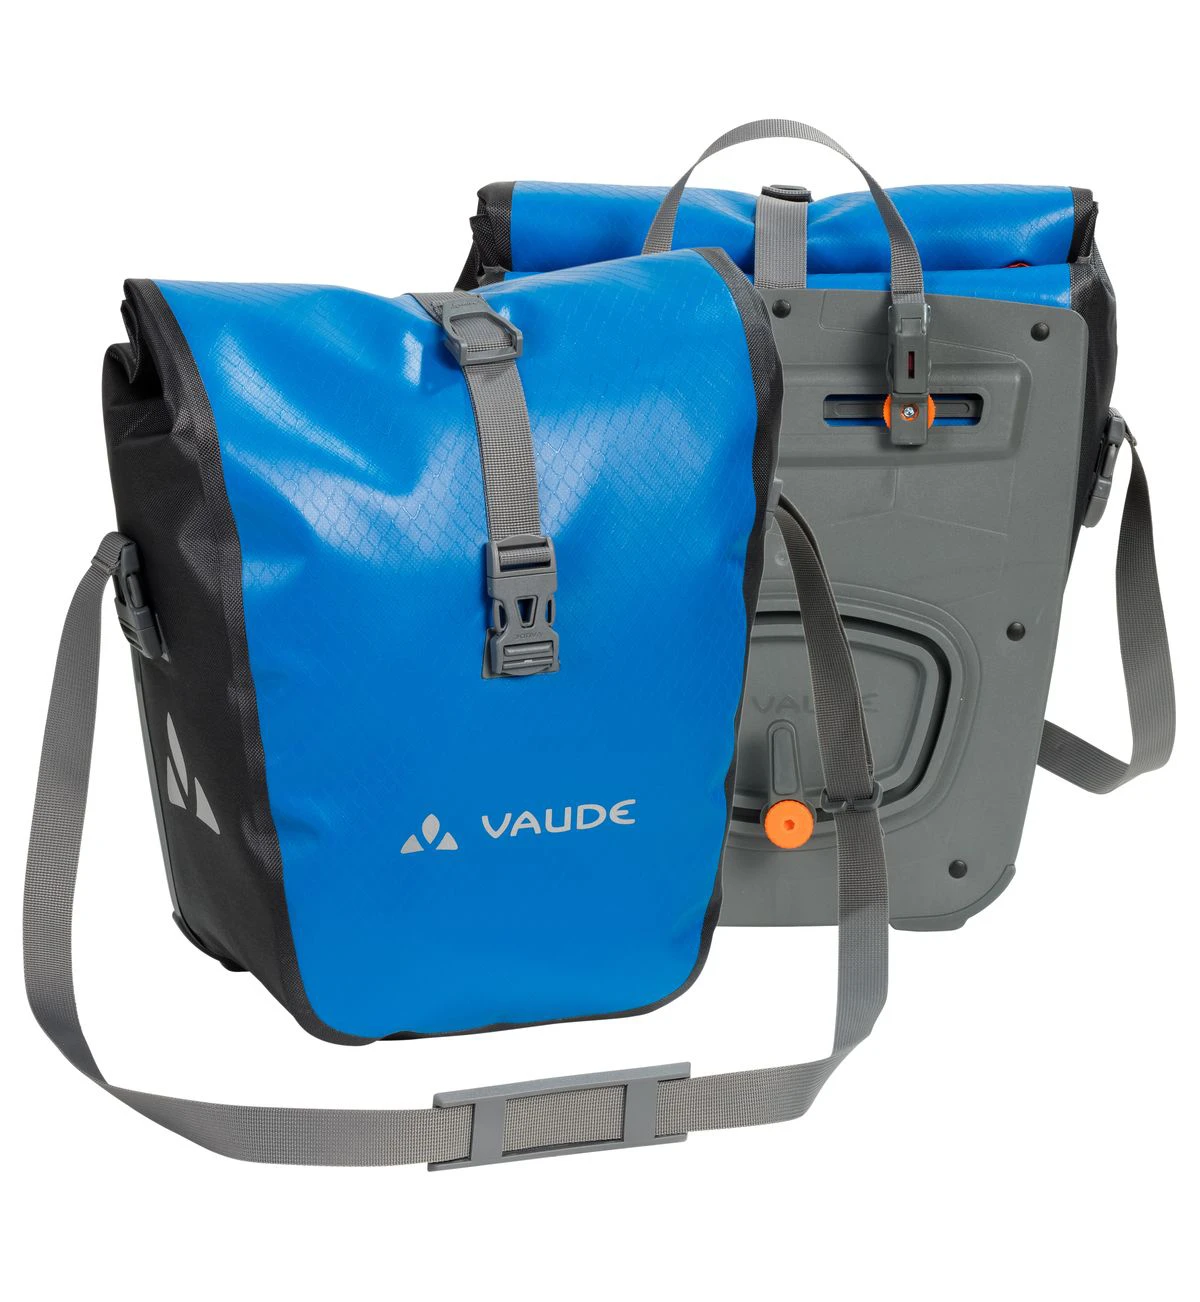 Vaude - Tasche Aqua Front blue